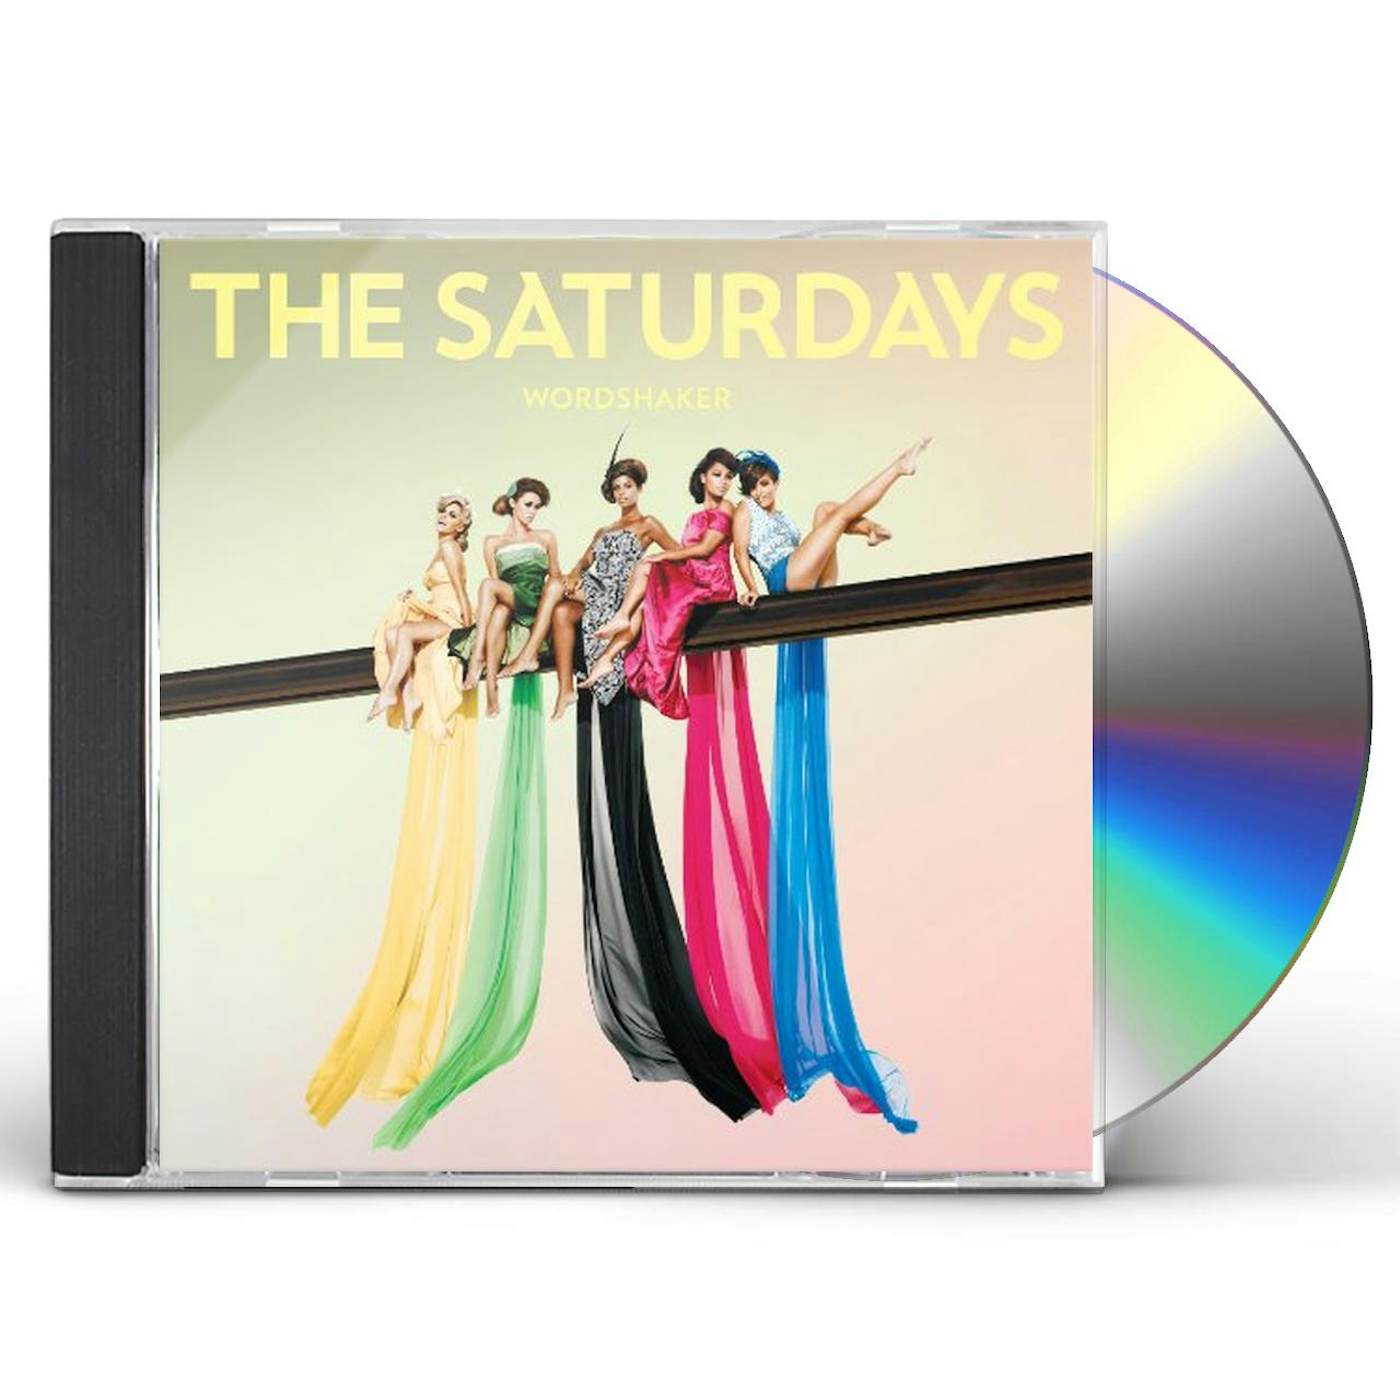 The Saturdays WORDSHAKER CD